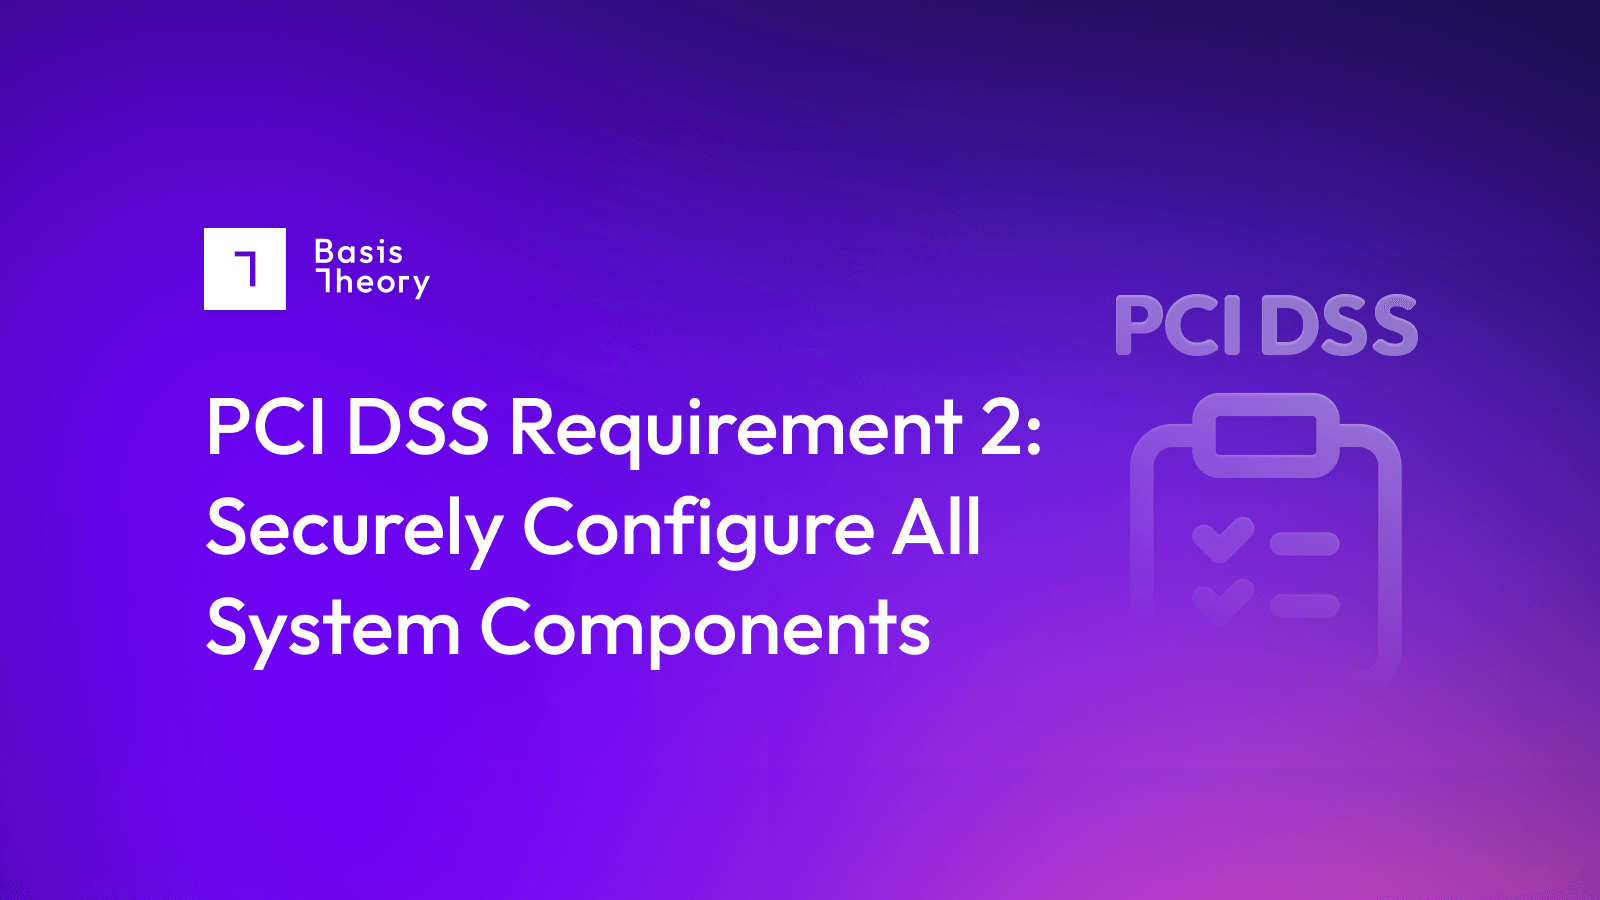 PCI DSS Requirement 2: Securely Configure Components